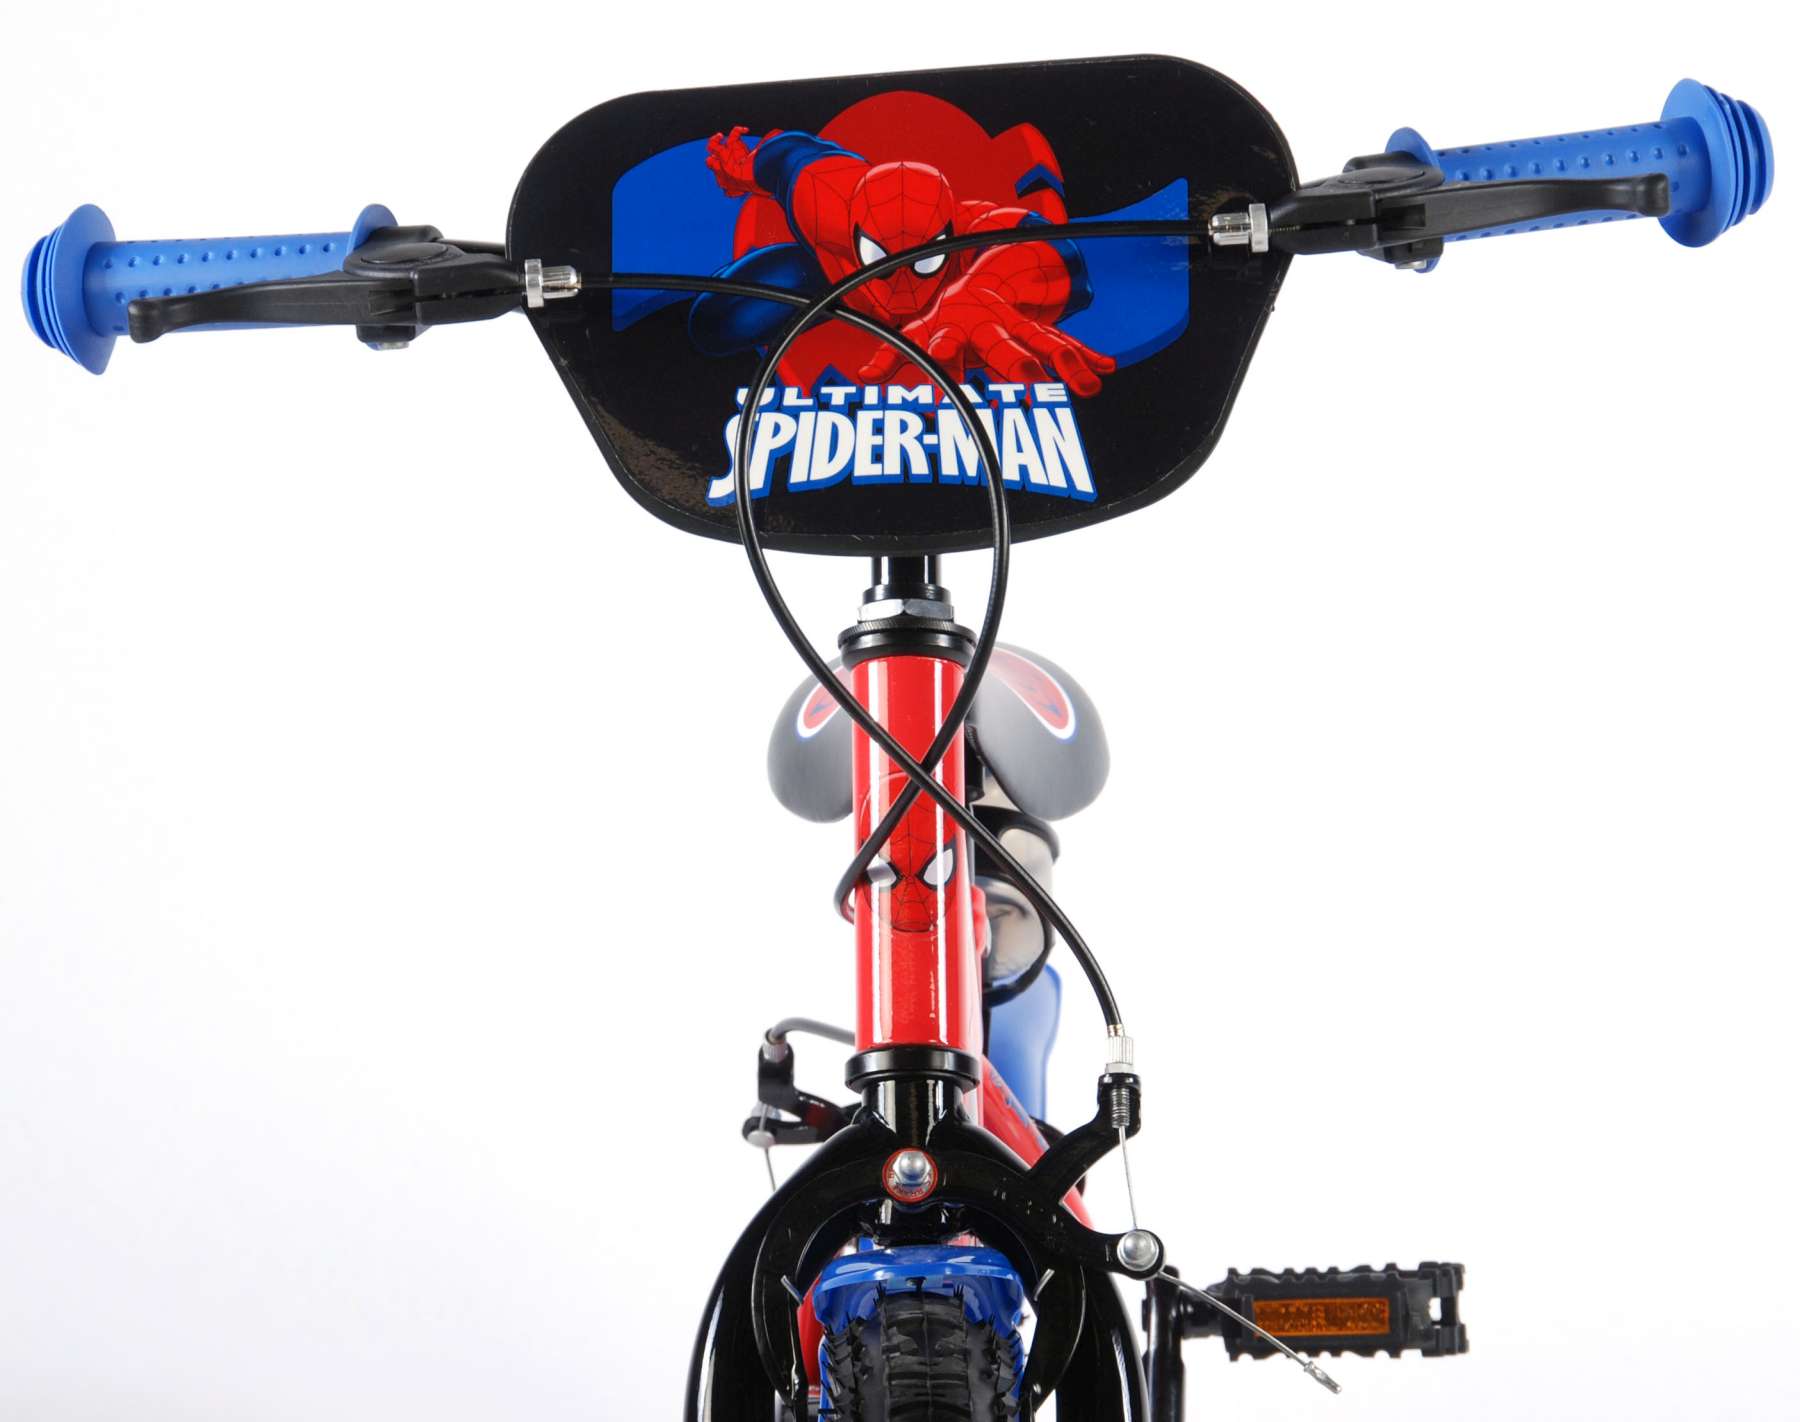 spiderman bike 16 inch uk